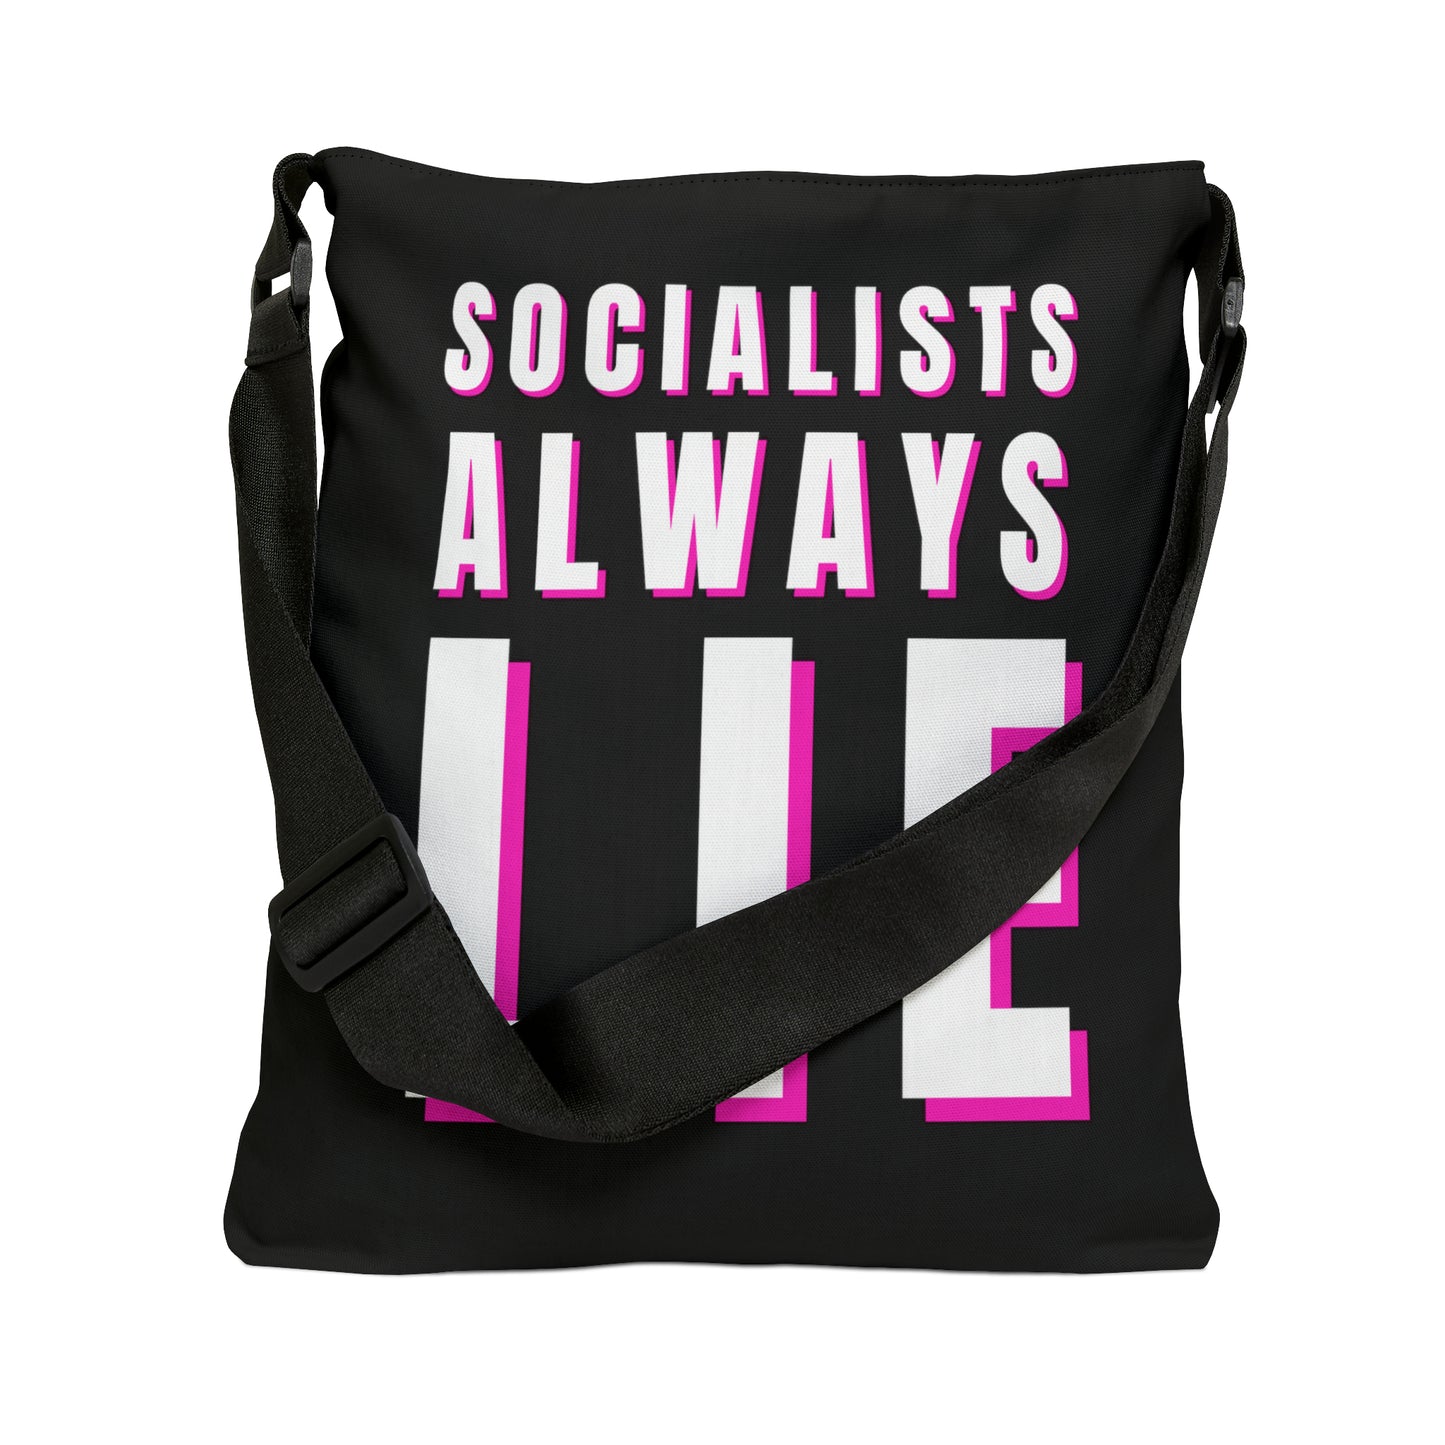 Socialists Always Lie Adjustable Tote Bag